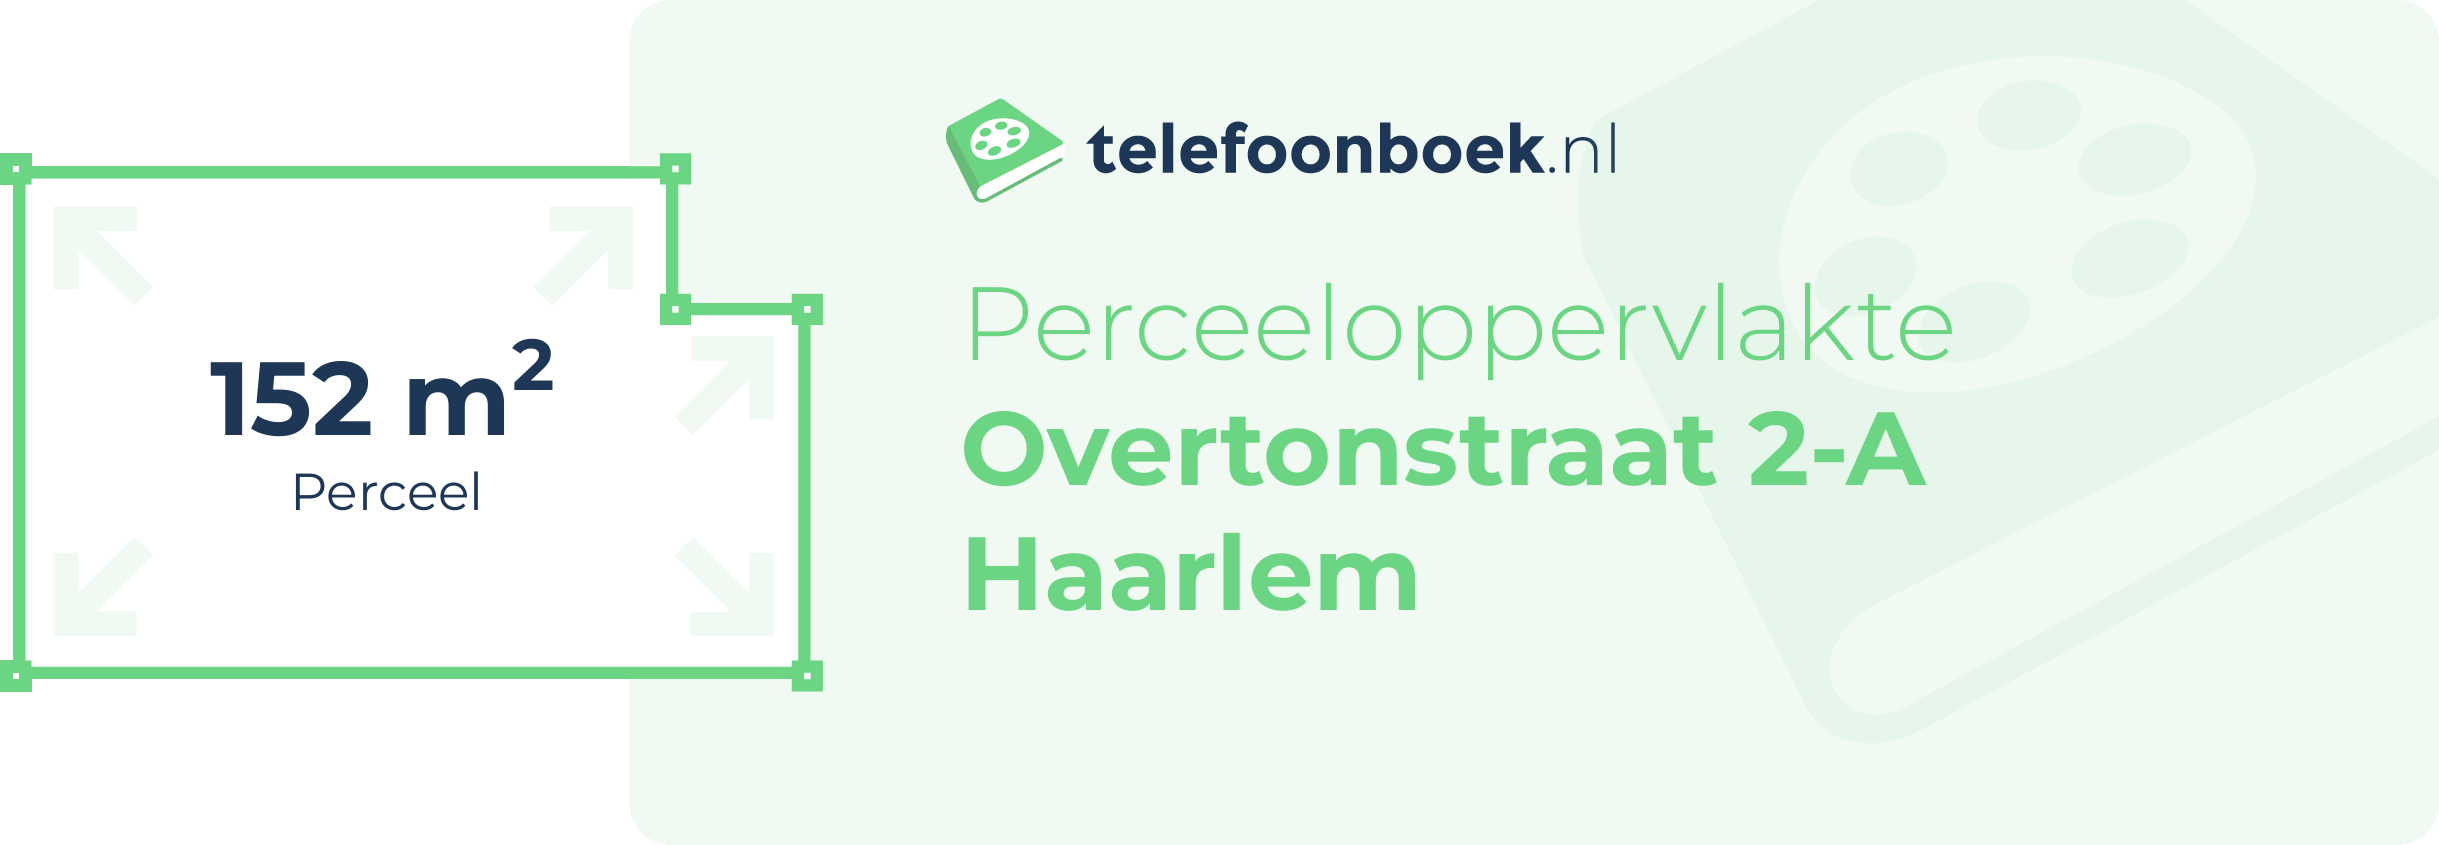 Perceeloppervlakte Overtonstraat 2-A Haarlem